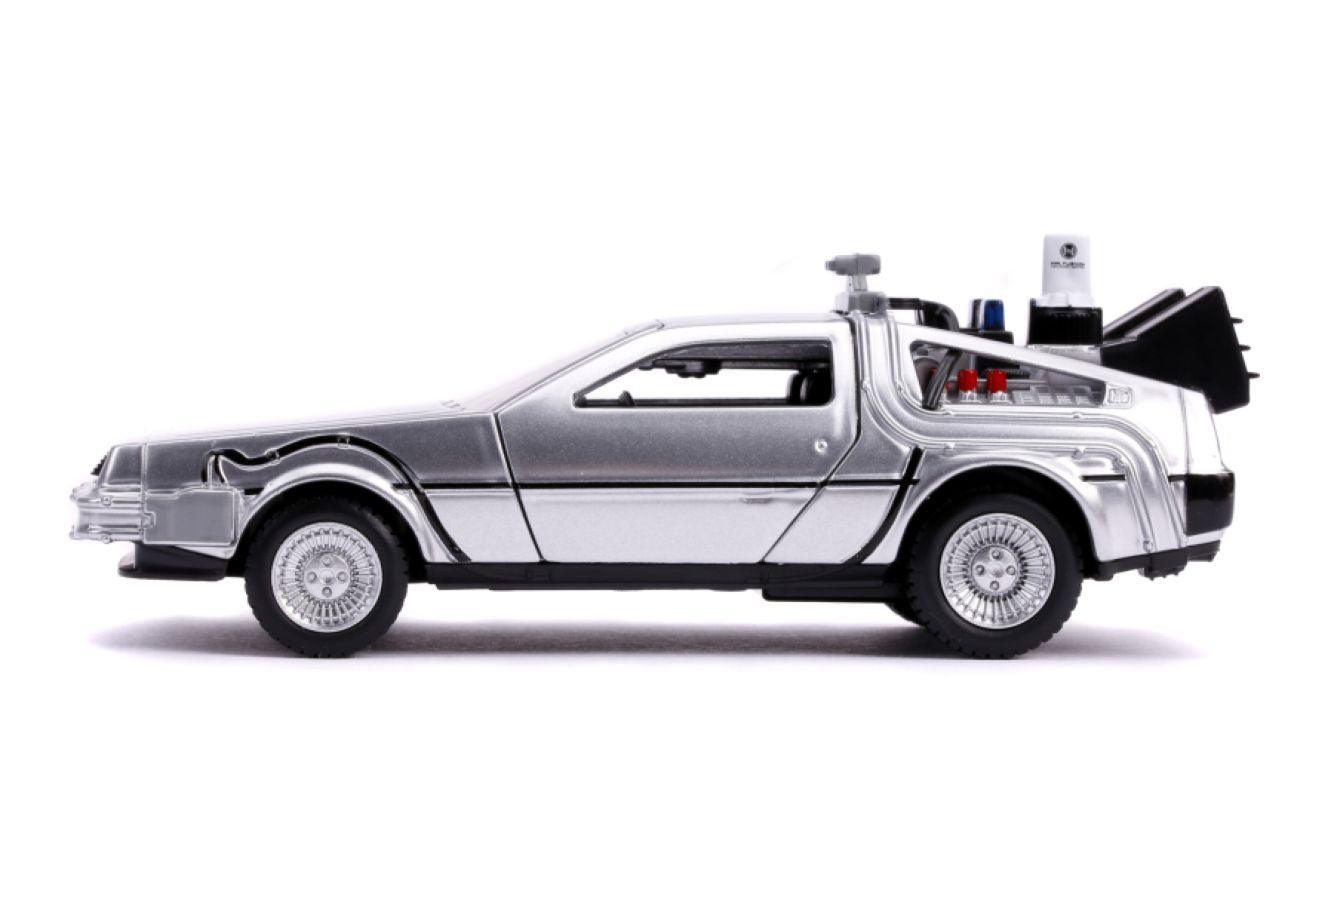 JAD30541 Back to the Future Part II - Delorean 1:32 Scale Hollywood Ride - Jada Toys - Titan Pop Culture